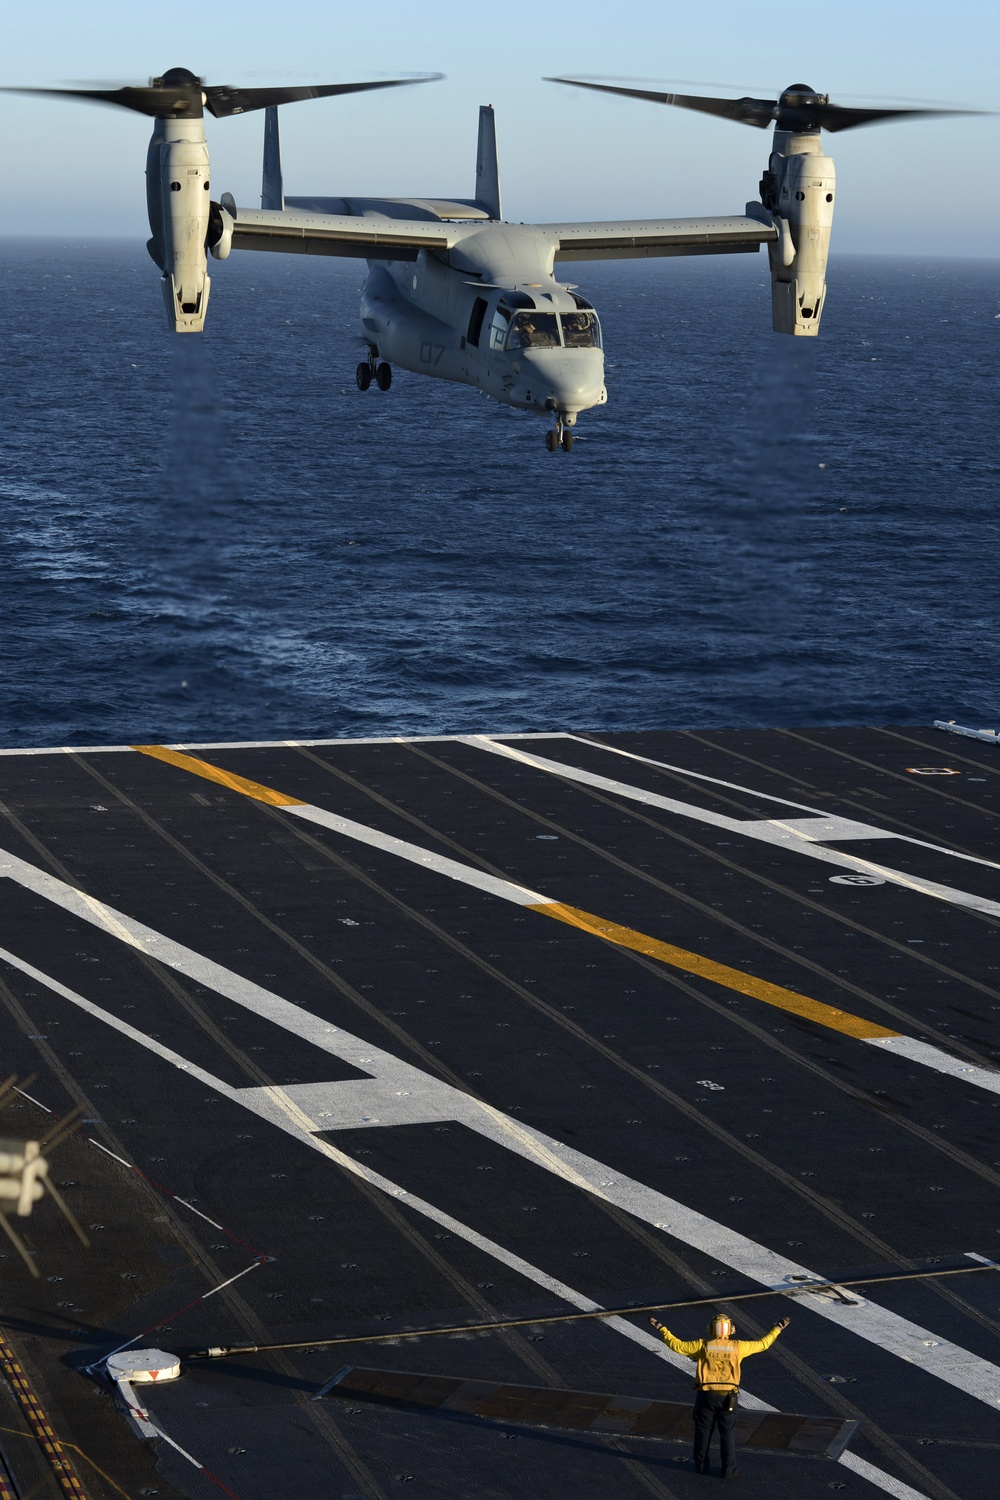 MV-22 Osprey prepares to land